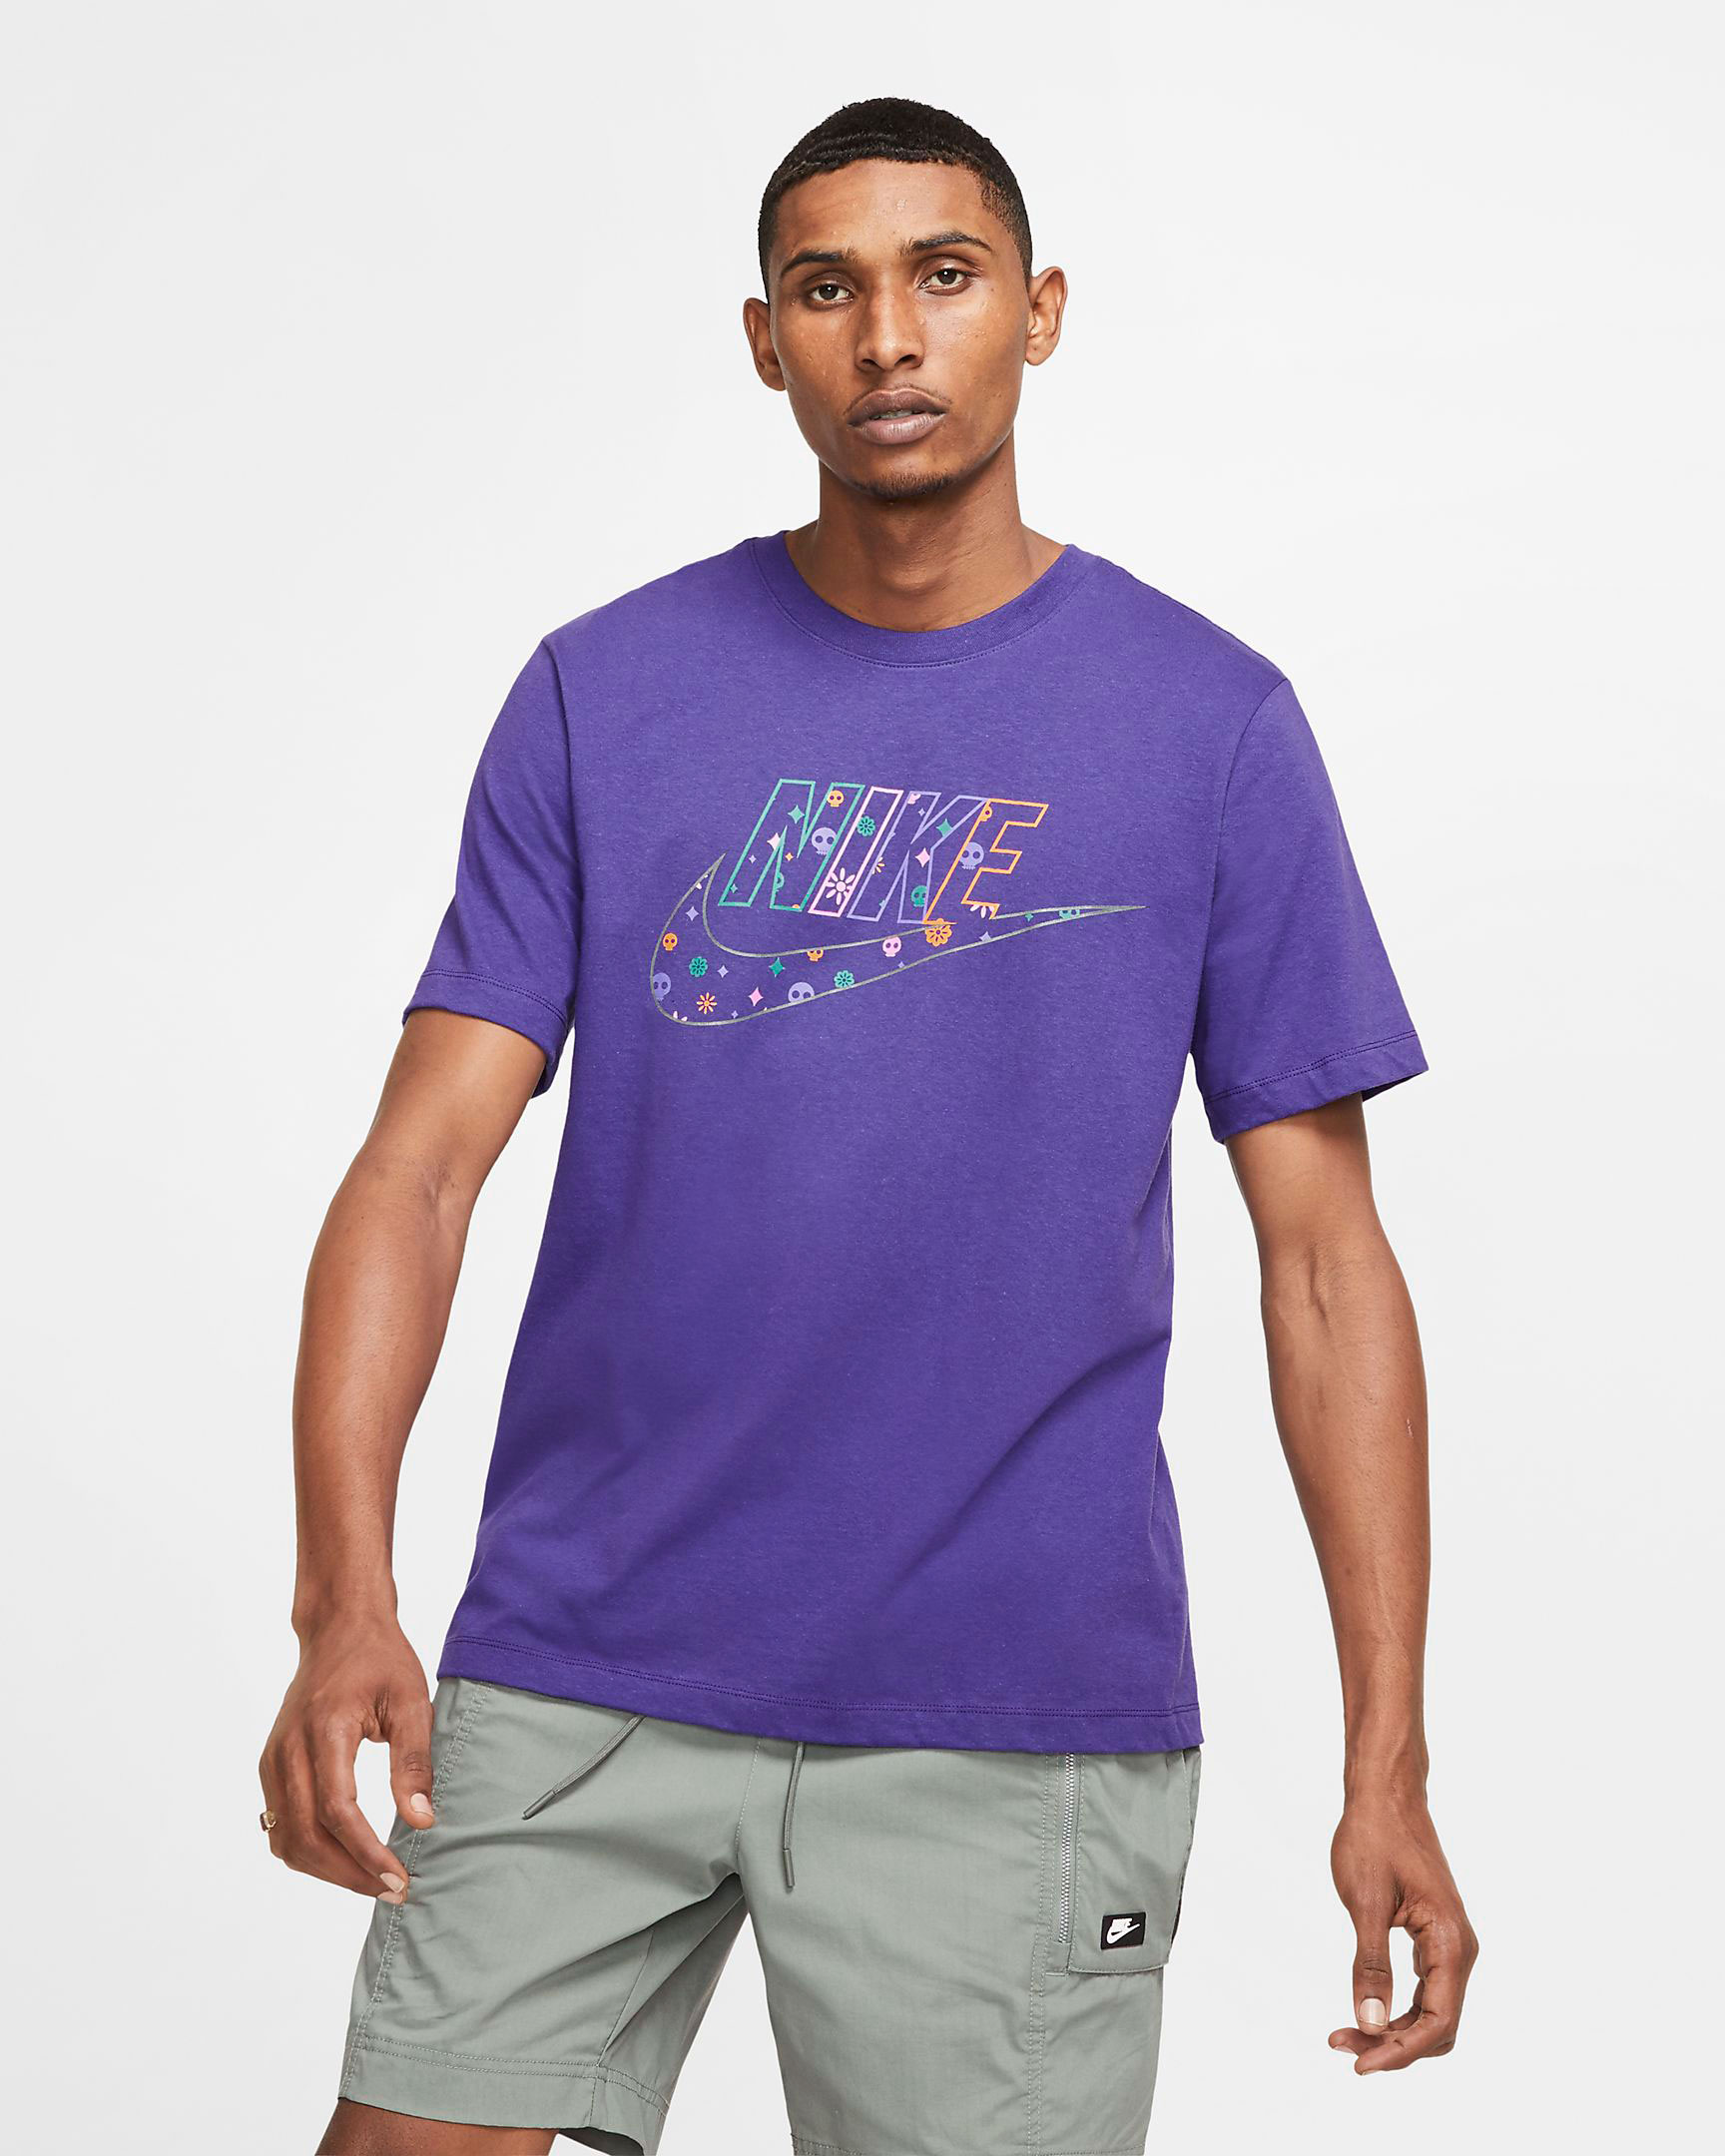 nike-day-of-the-dead-tee-shirt-purple-1